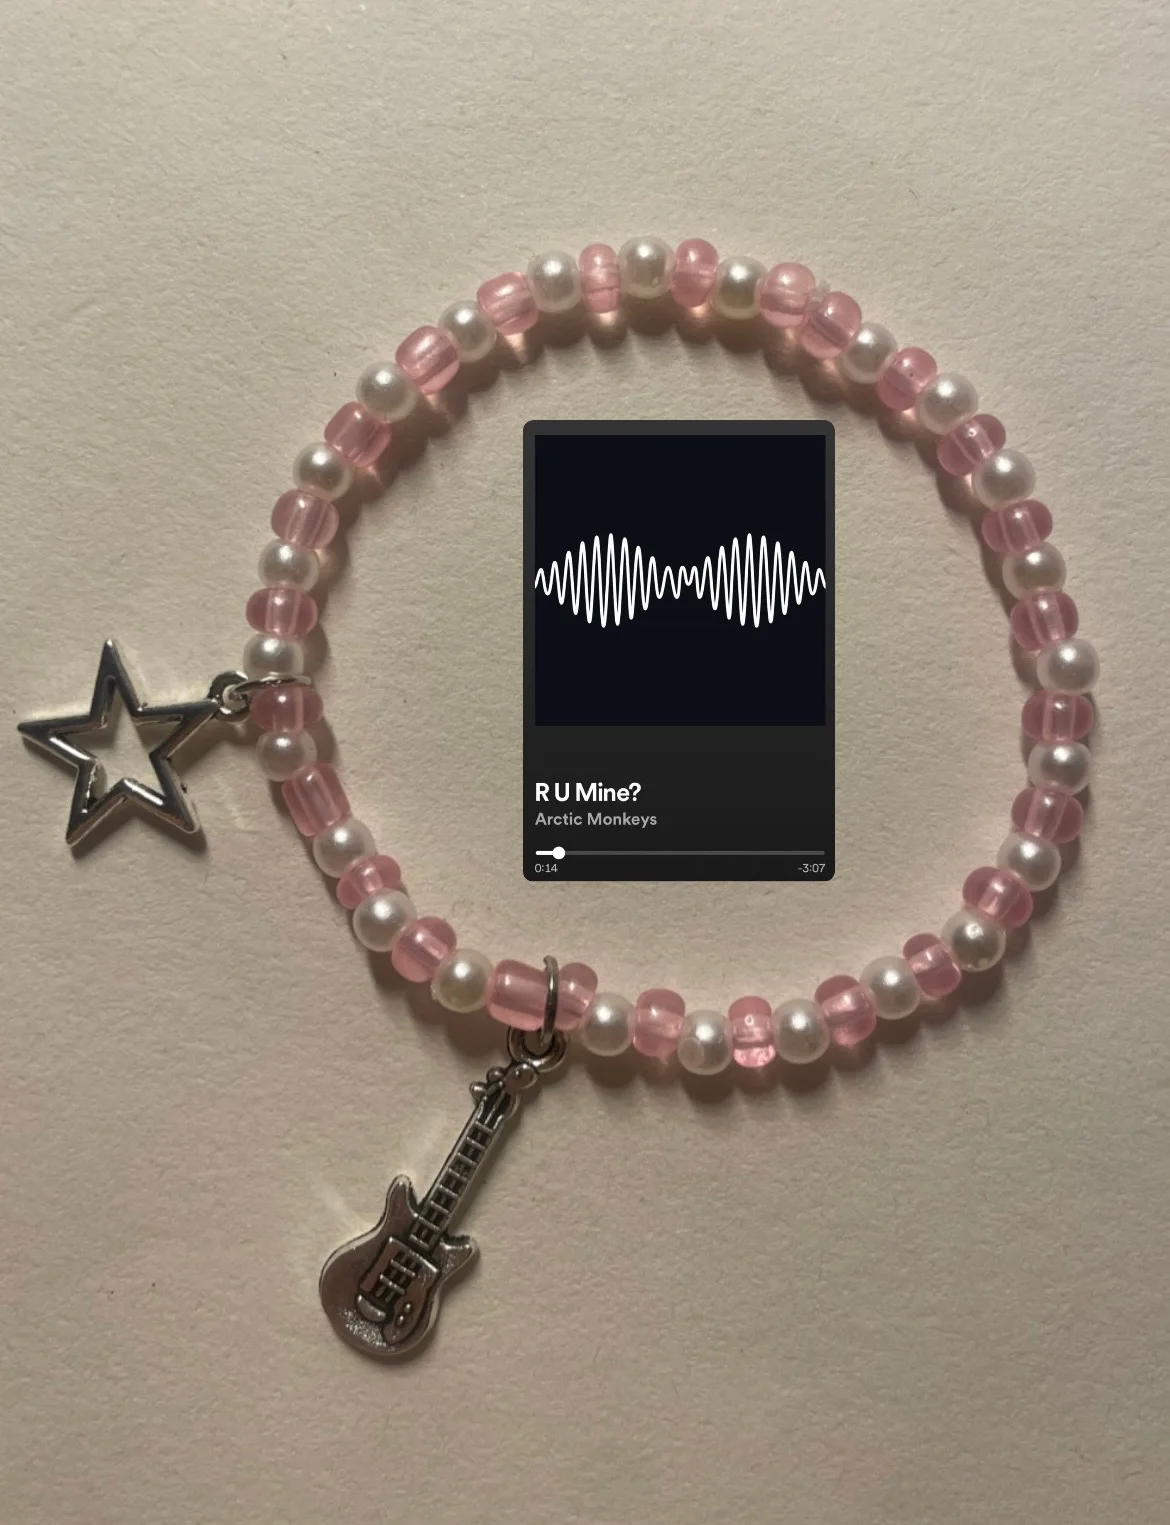 I wanna be yours Arctic Monkeys matching bracelet set - AliExpress